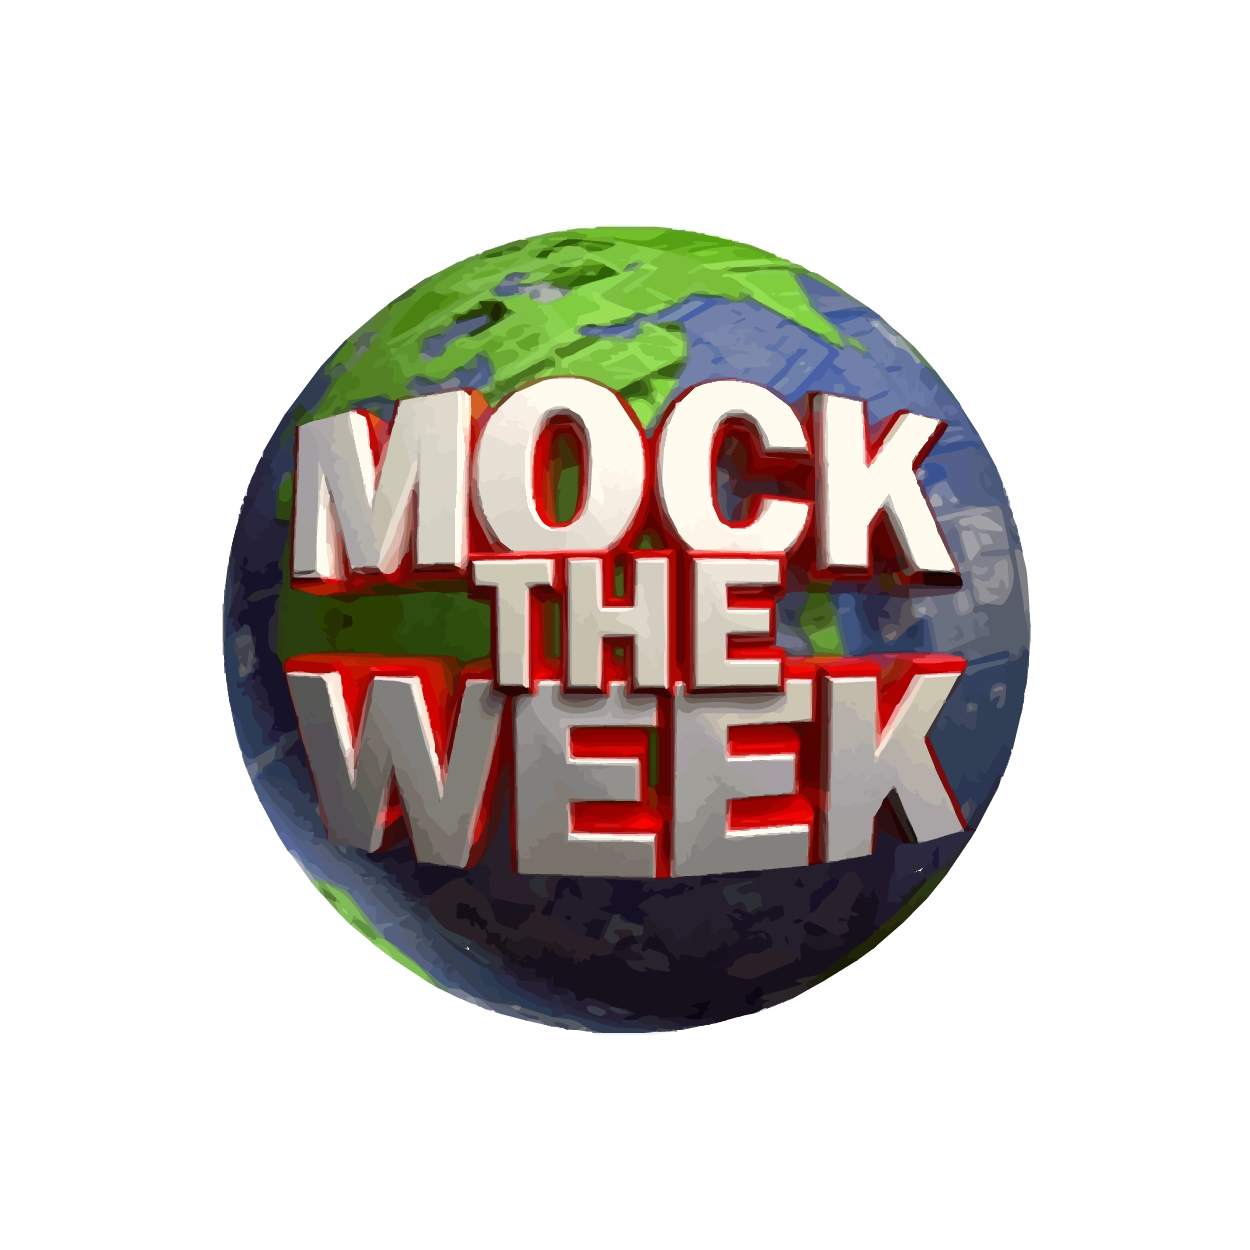 Zuva - Logo's_mock the week